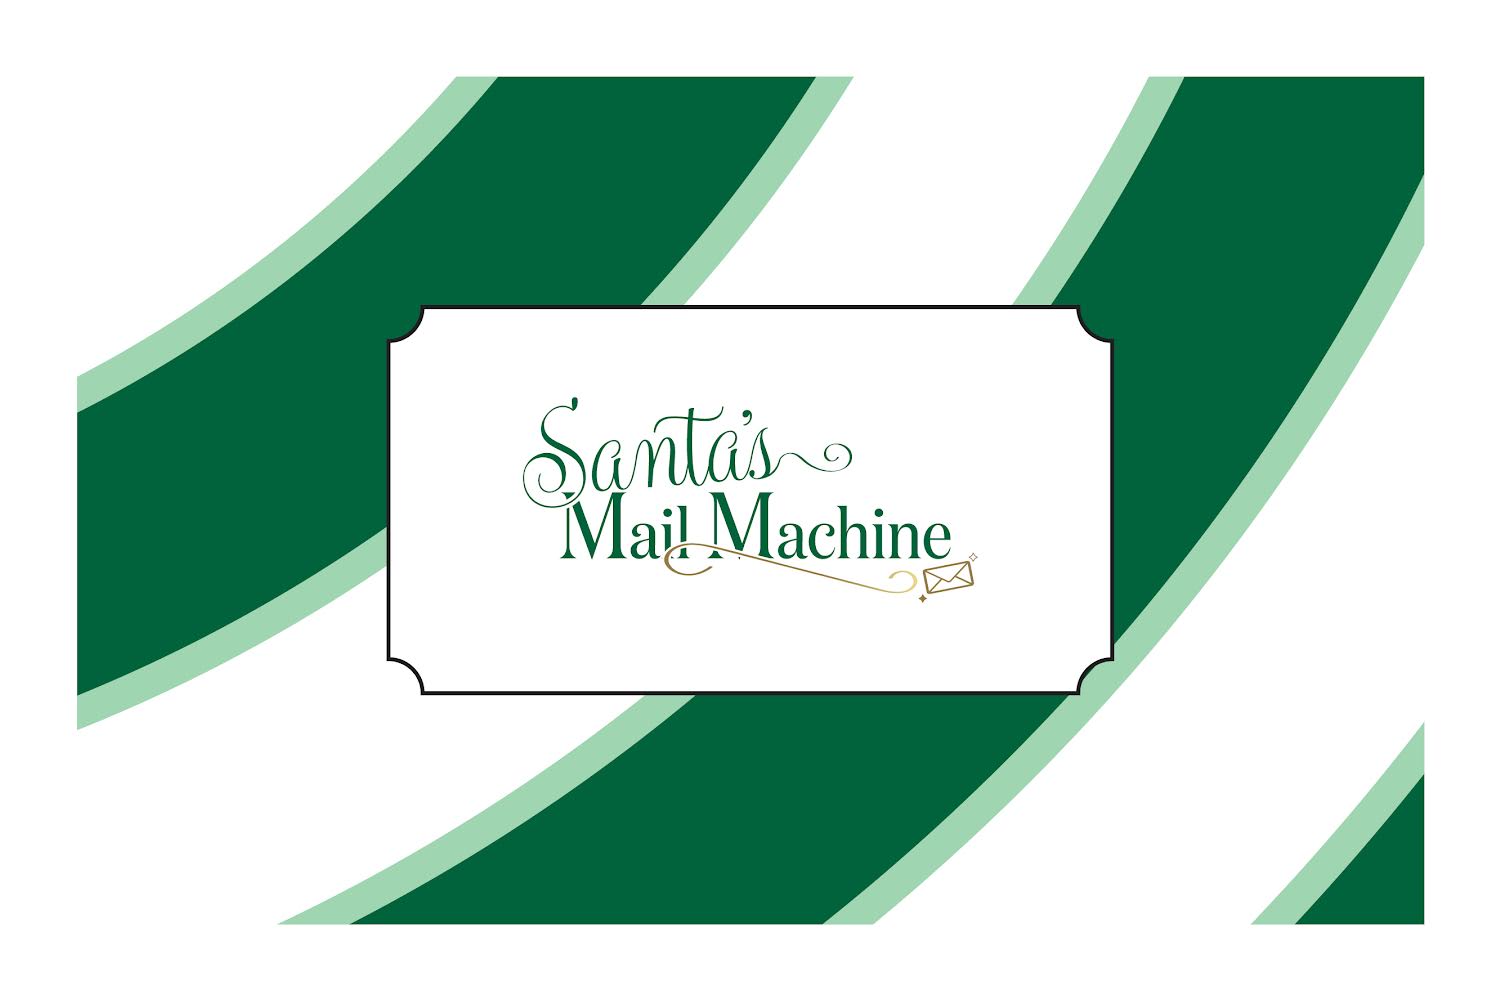 Cover image: The Magic Mail Machine